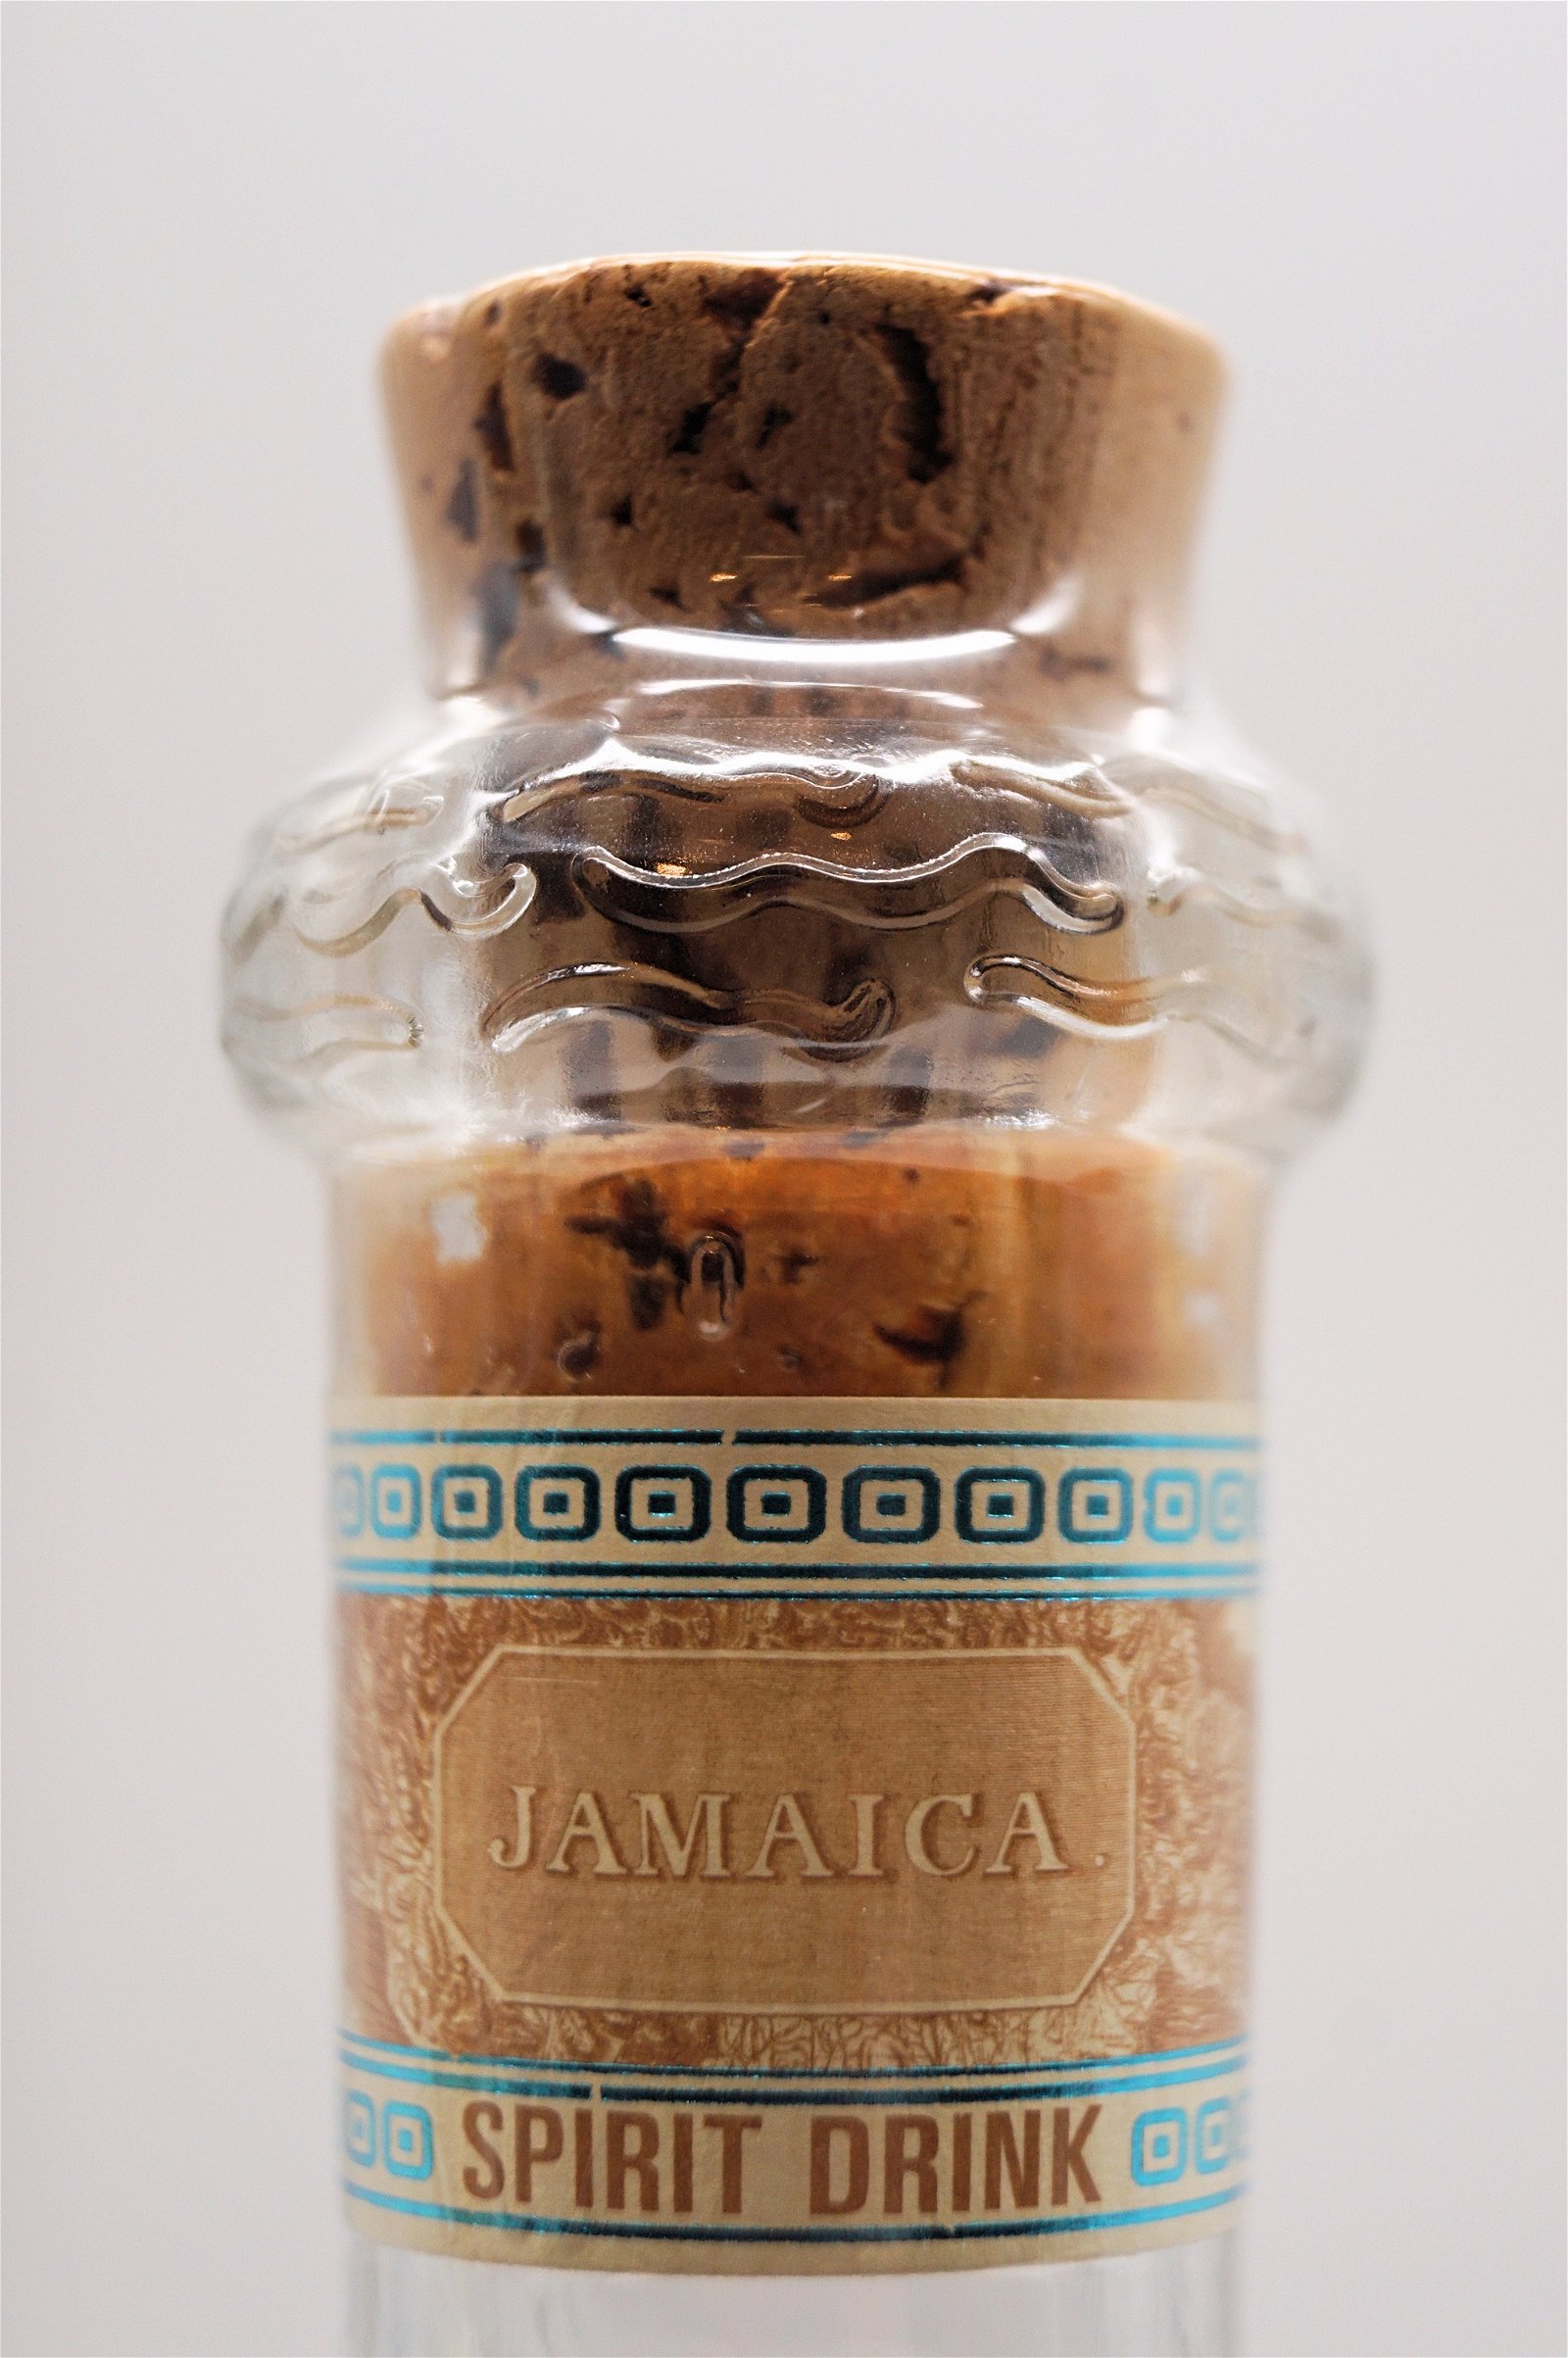 Canerock  Jamaican Spiced Rum